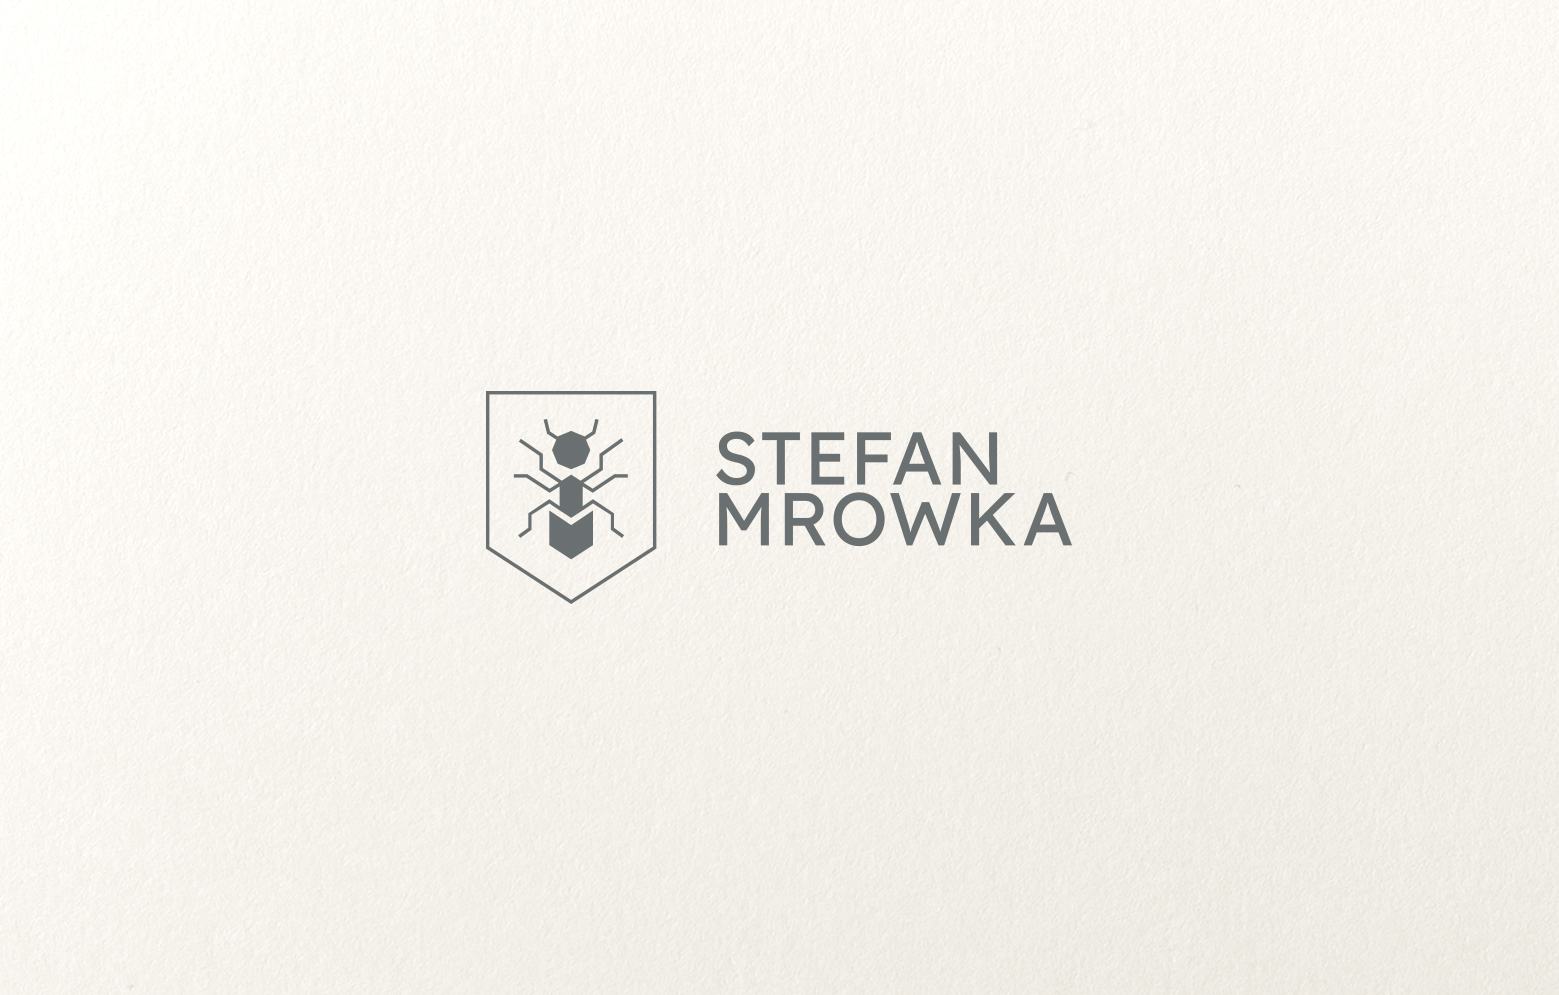 Stefan Mrowka Wort-Bildmarke